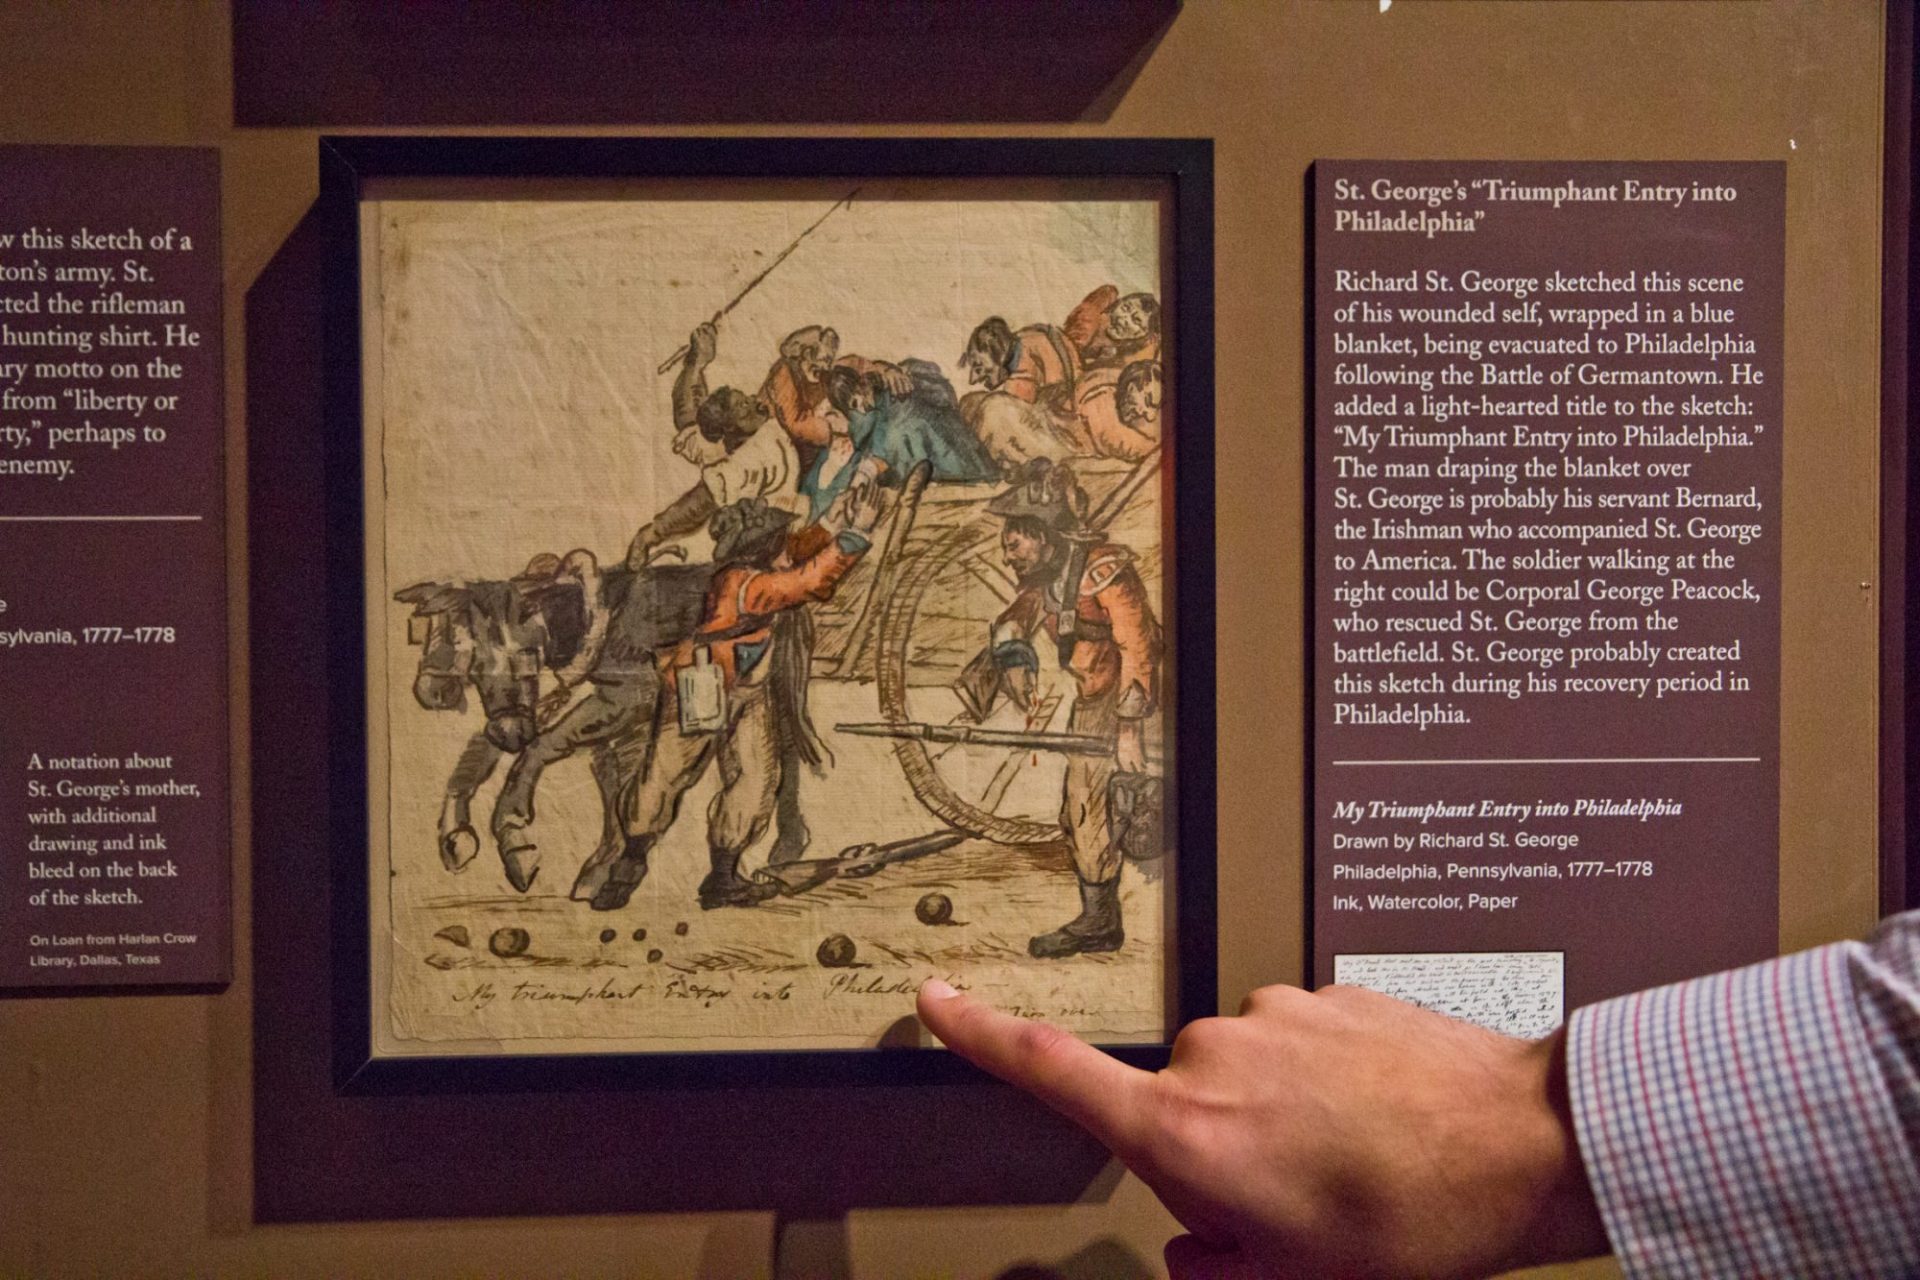 A cartoon drawn by Richard St. George on the battlefield as he was taken to Philadelphia after a head trauma.